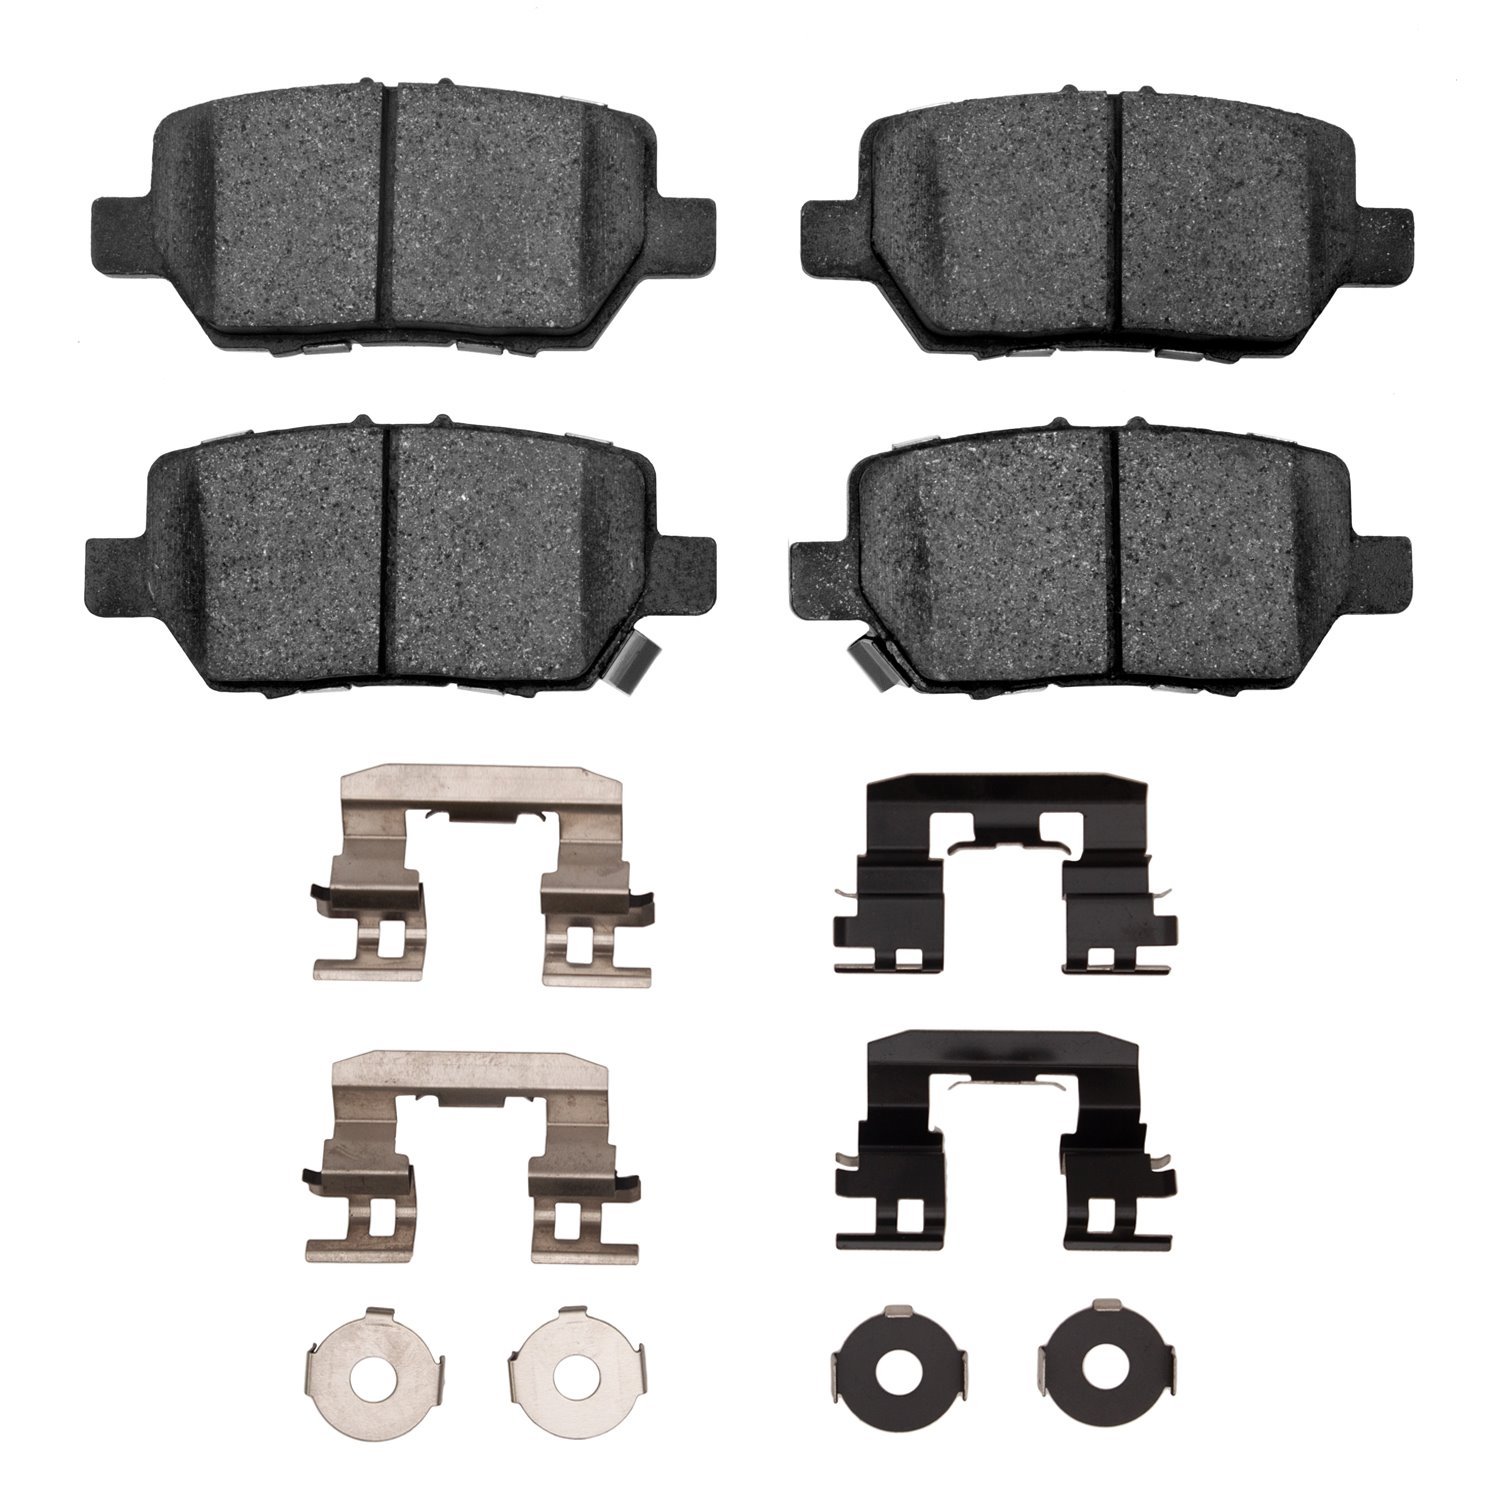 1551-1090-01 5000 Advanced Ceramic Brake Pads & Hardware Kit, 2005-2012 Acura/Honda, Position: Rear